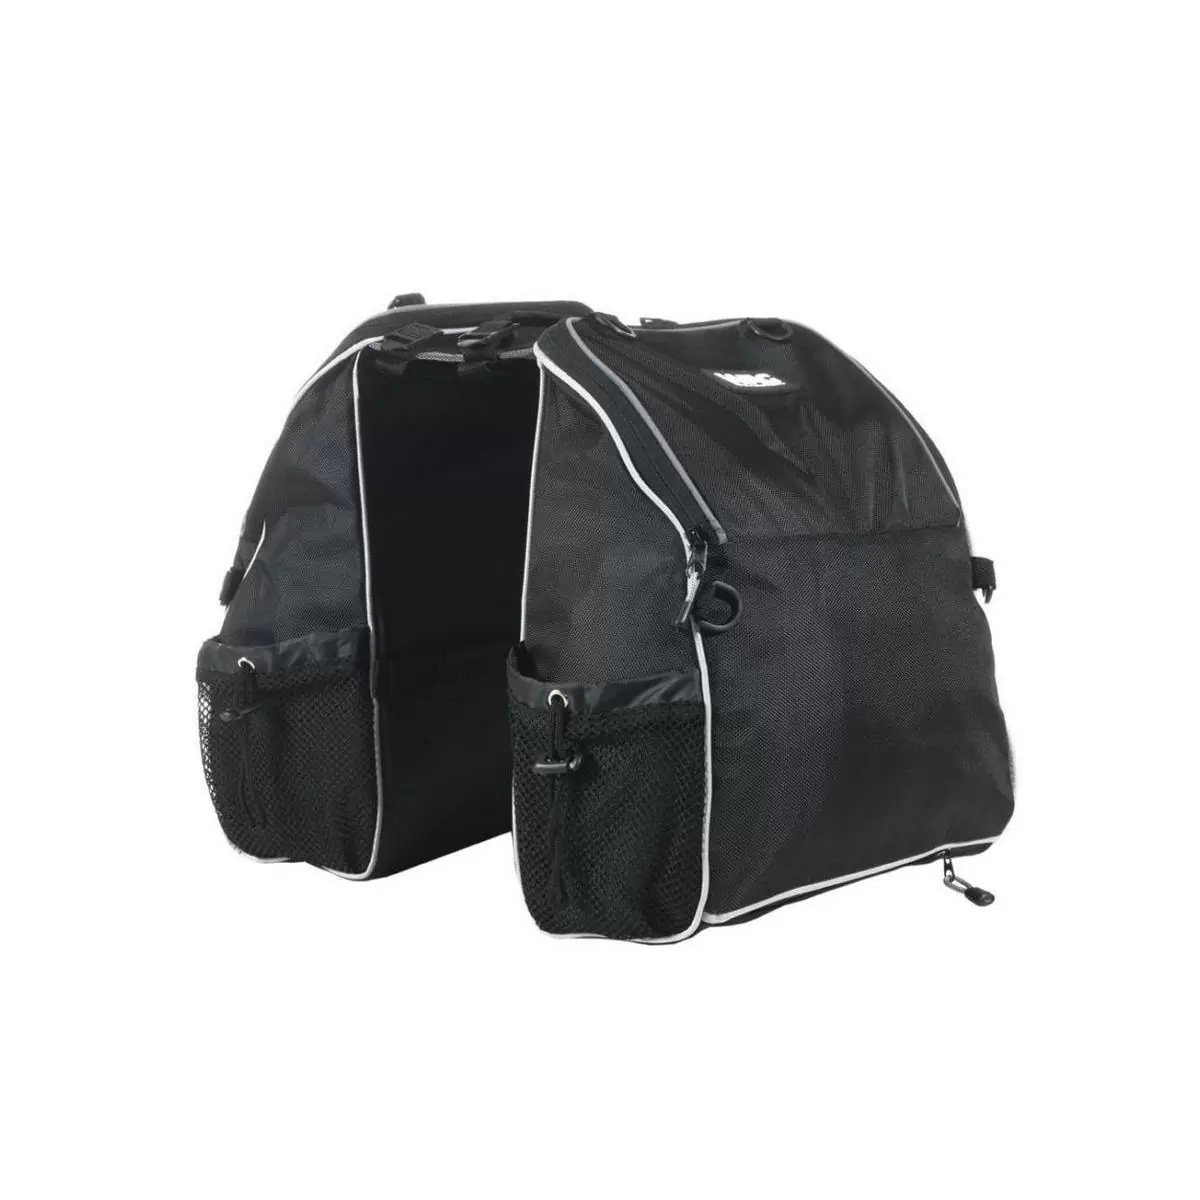 rear side pannier bag compact - image